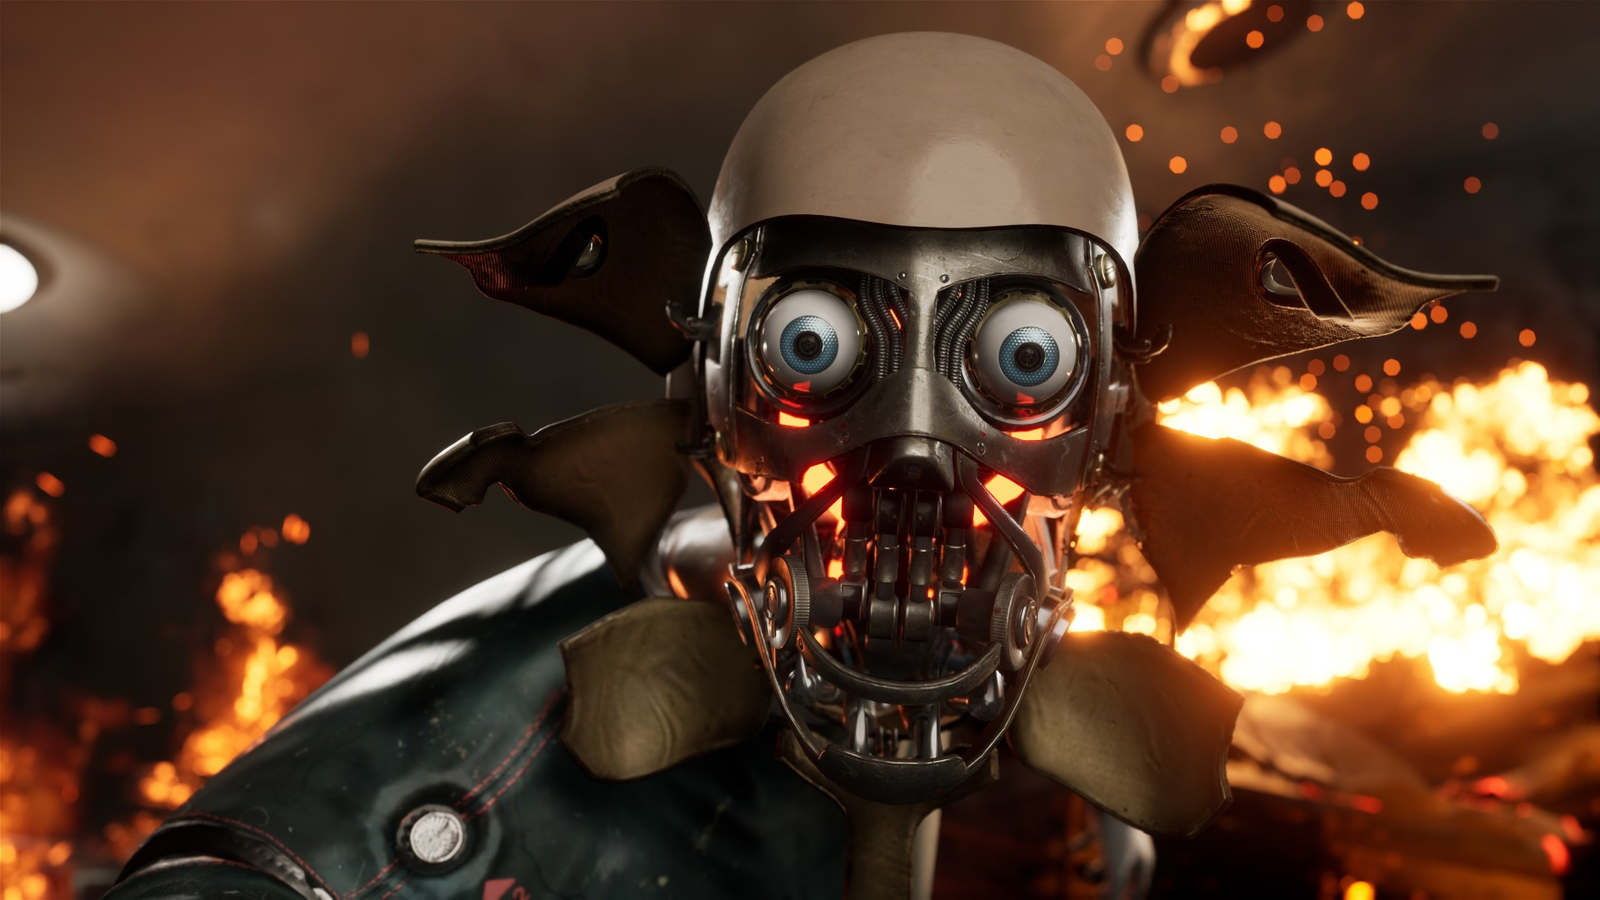 Atomic Heart 'Annihilation Instinct' DLC Adds New Area & Story To